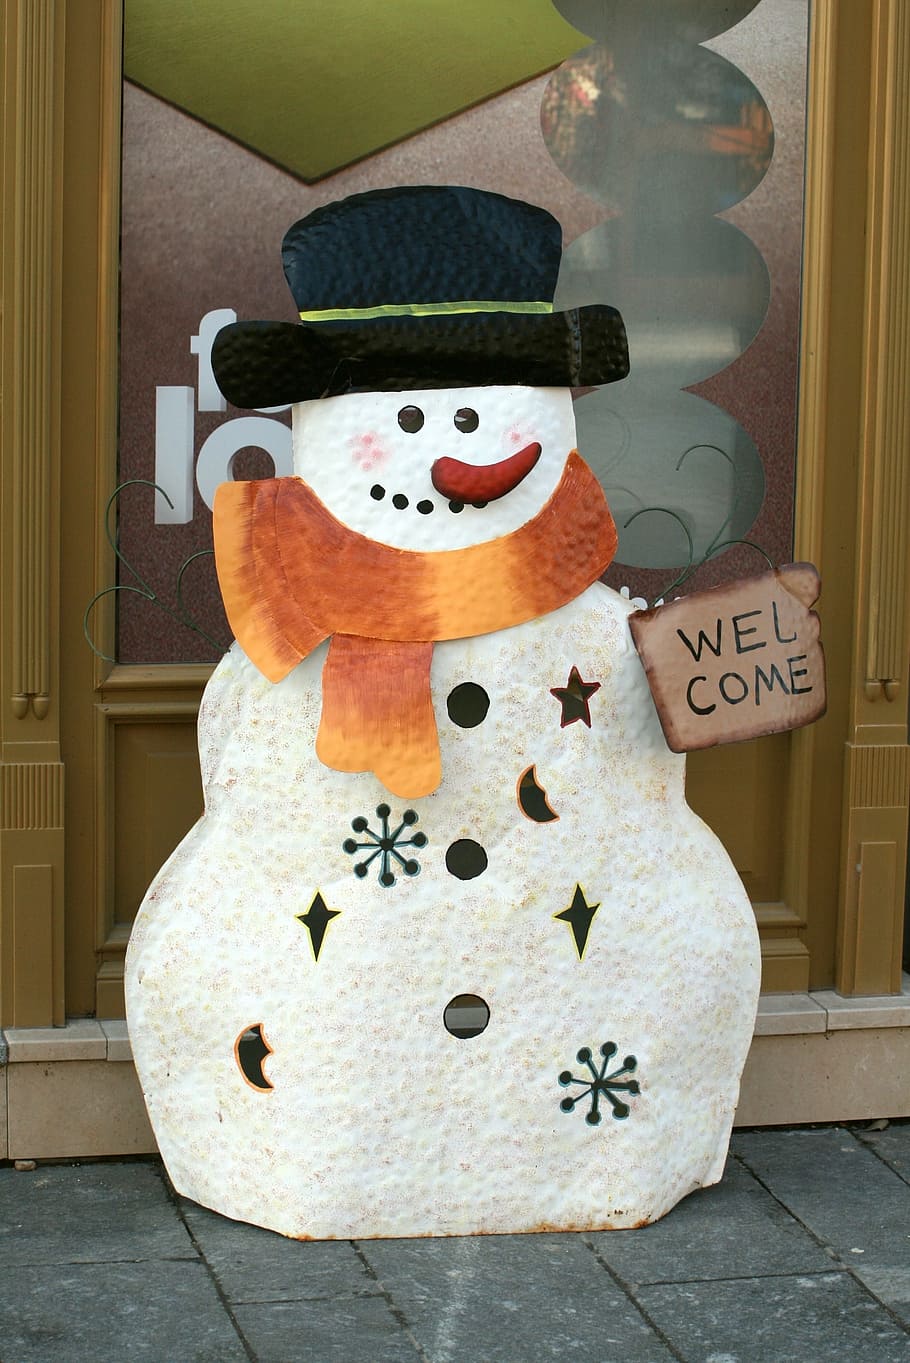 cold, winter, snowman, december, snow, wintery, representation, creativity, stuffed toy, indoors